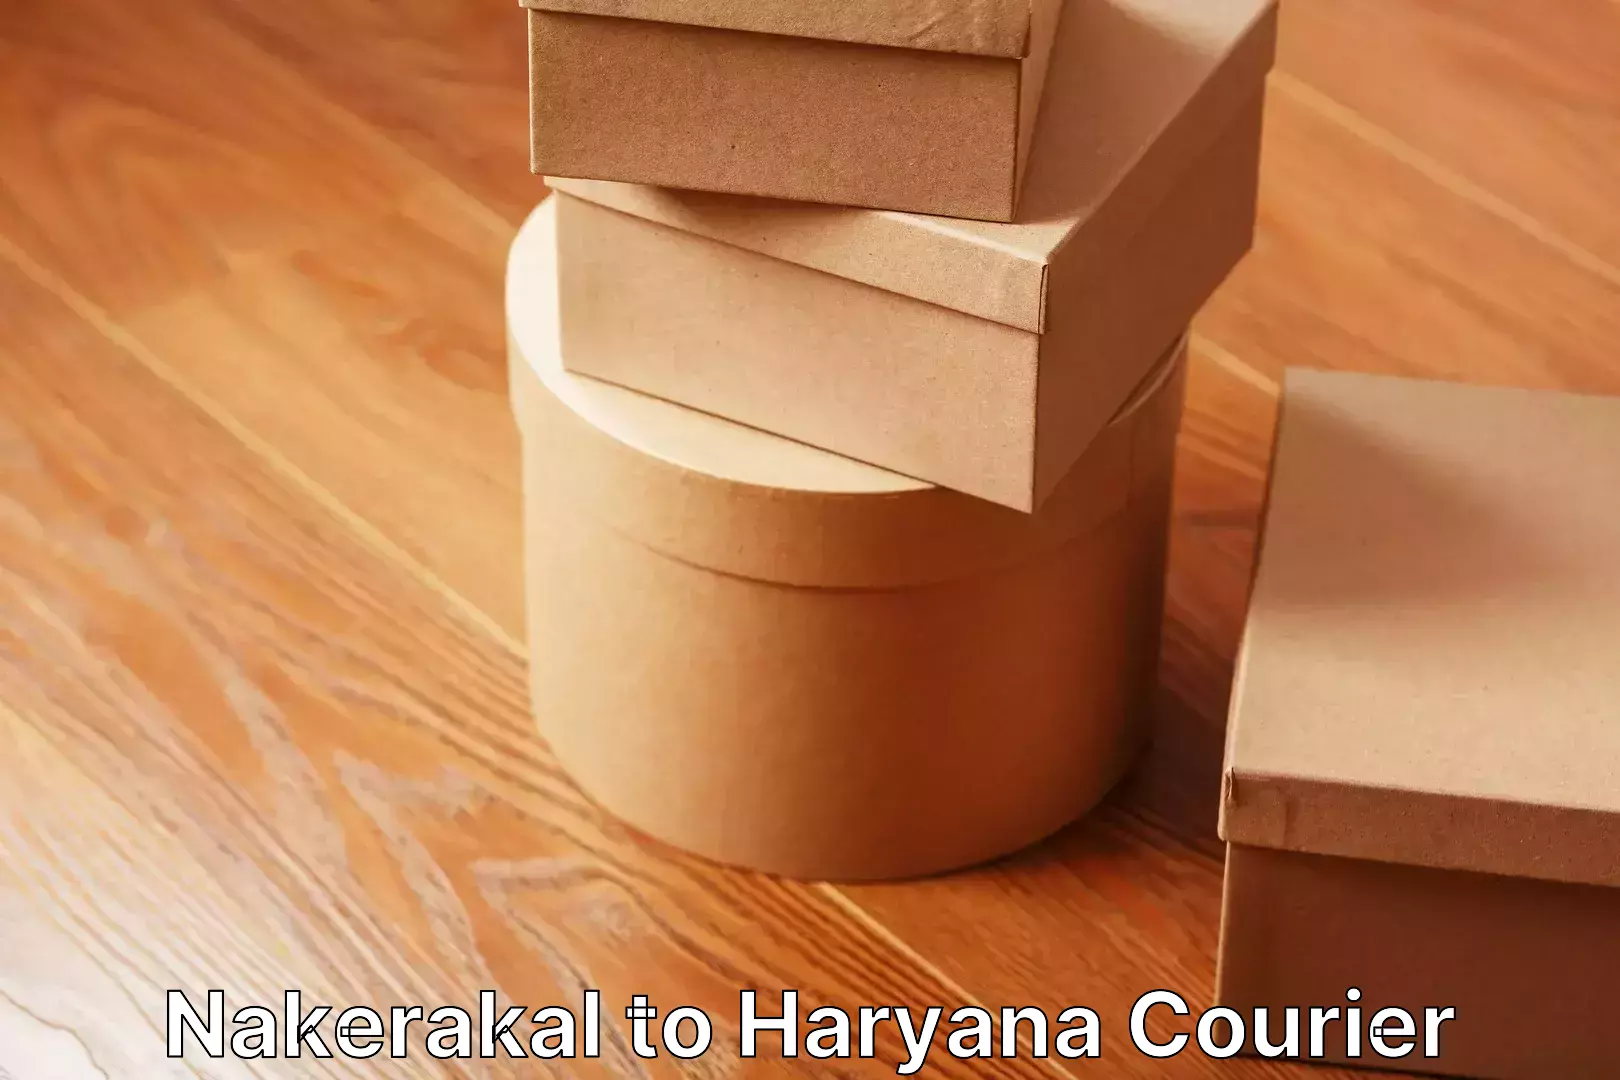 Quality relocation assistance Nakerakal to Haryana